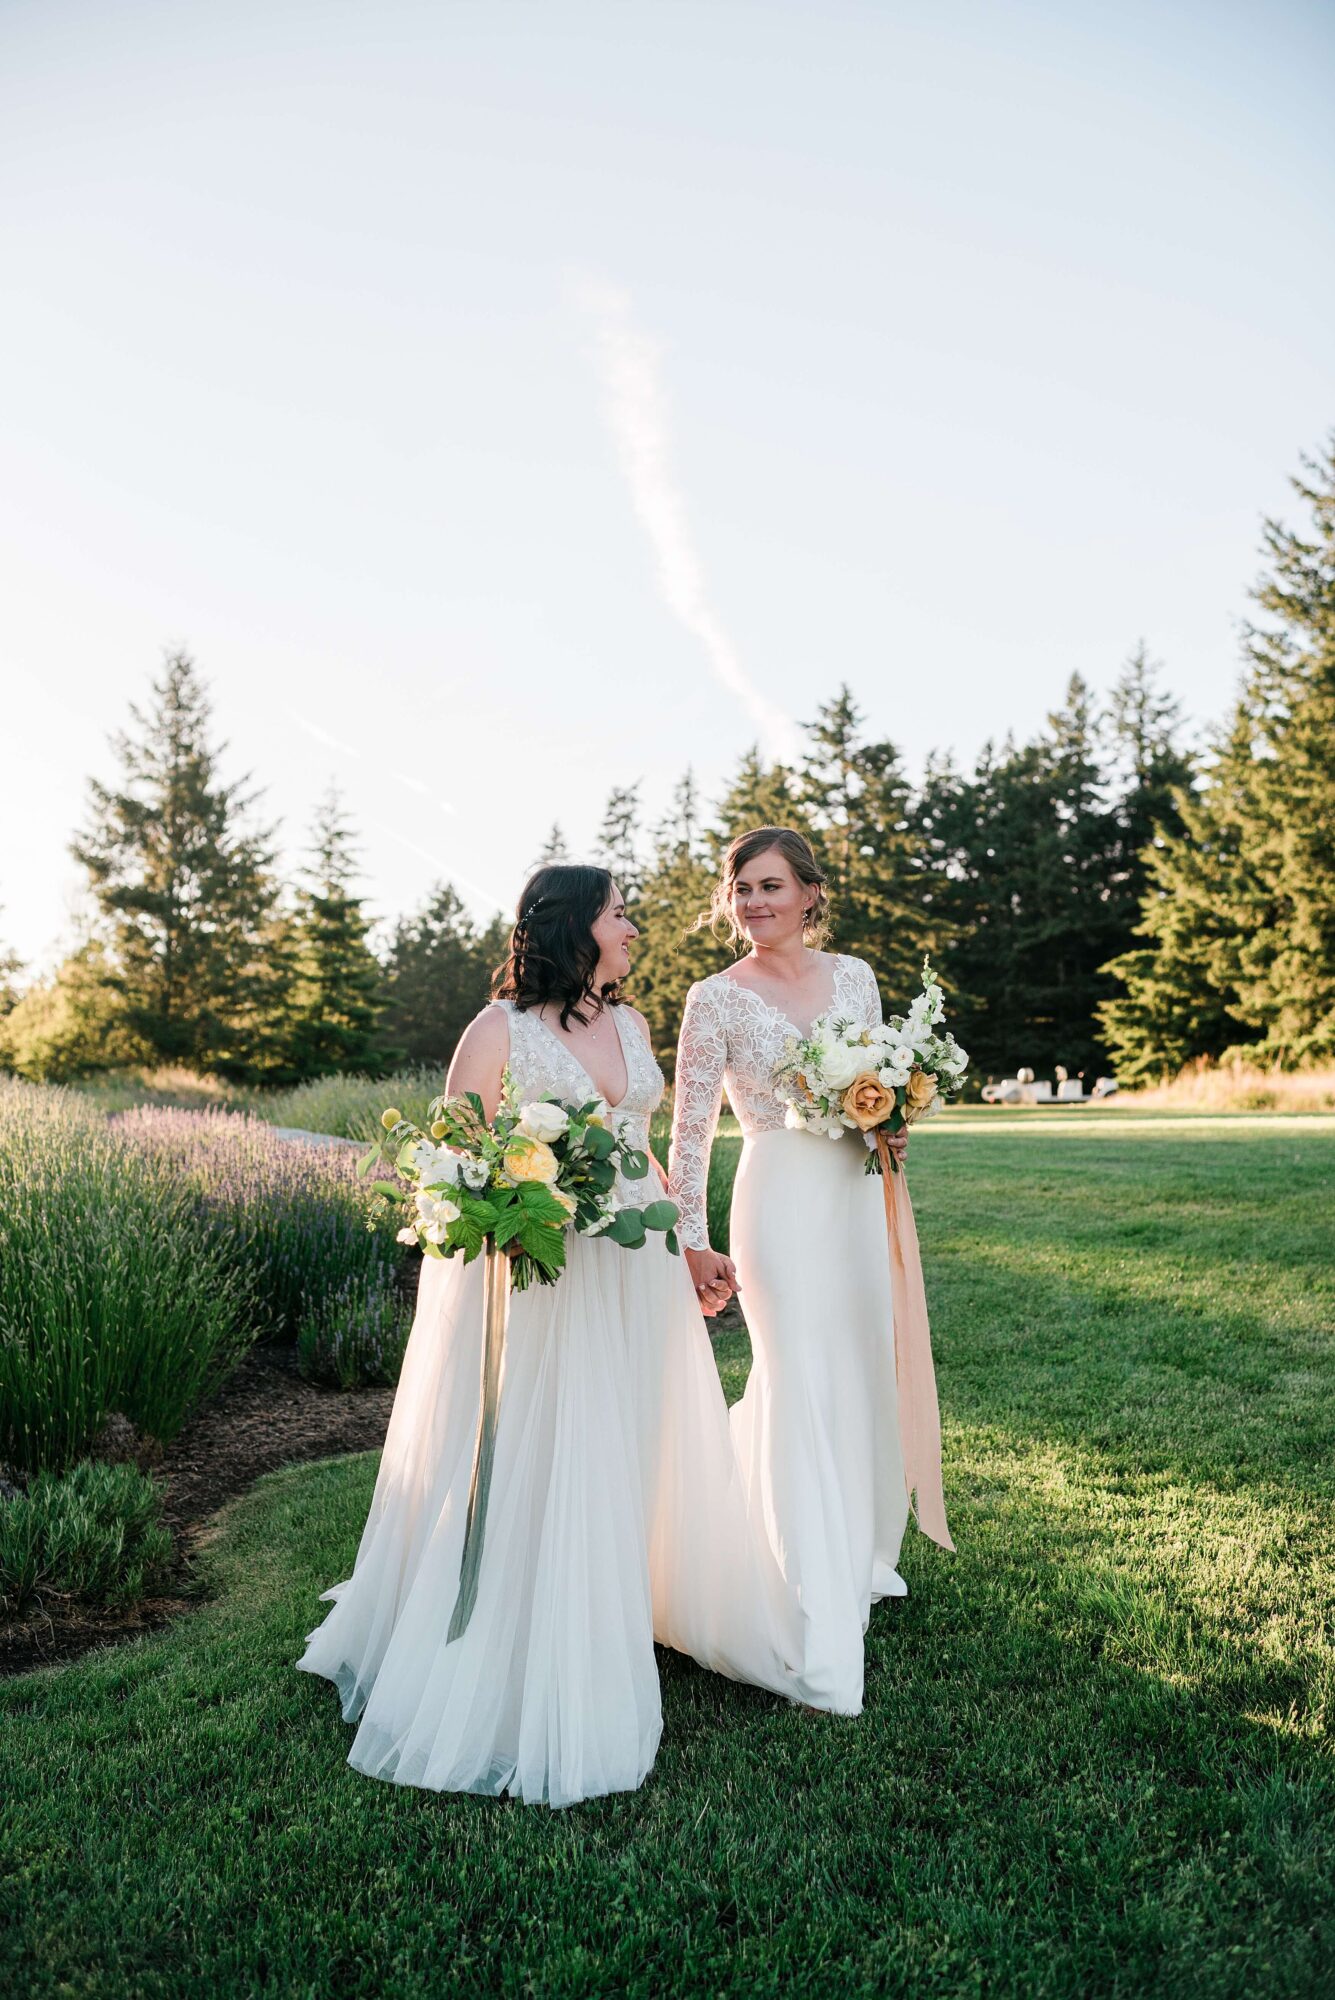 Two stunning brides at a a LGTBQ+ wedding at Saltwater Farm on San Juan Island